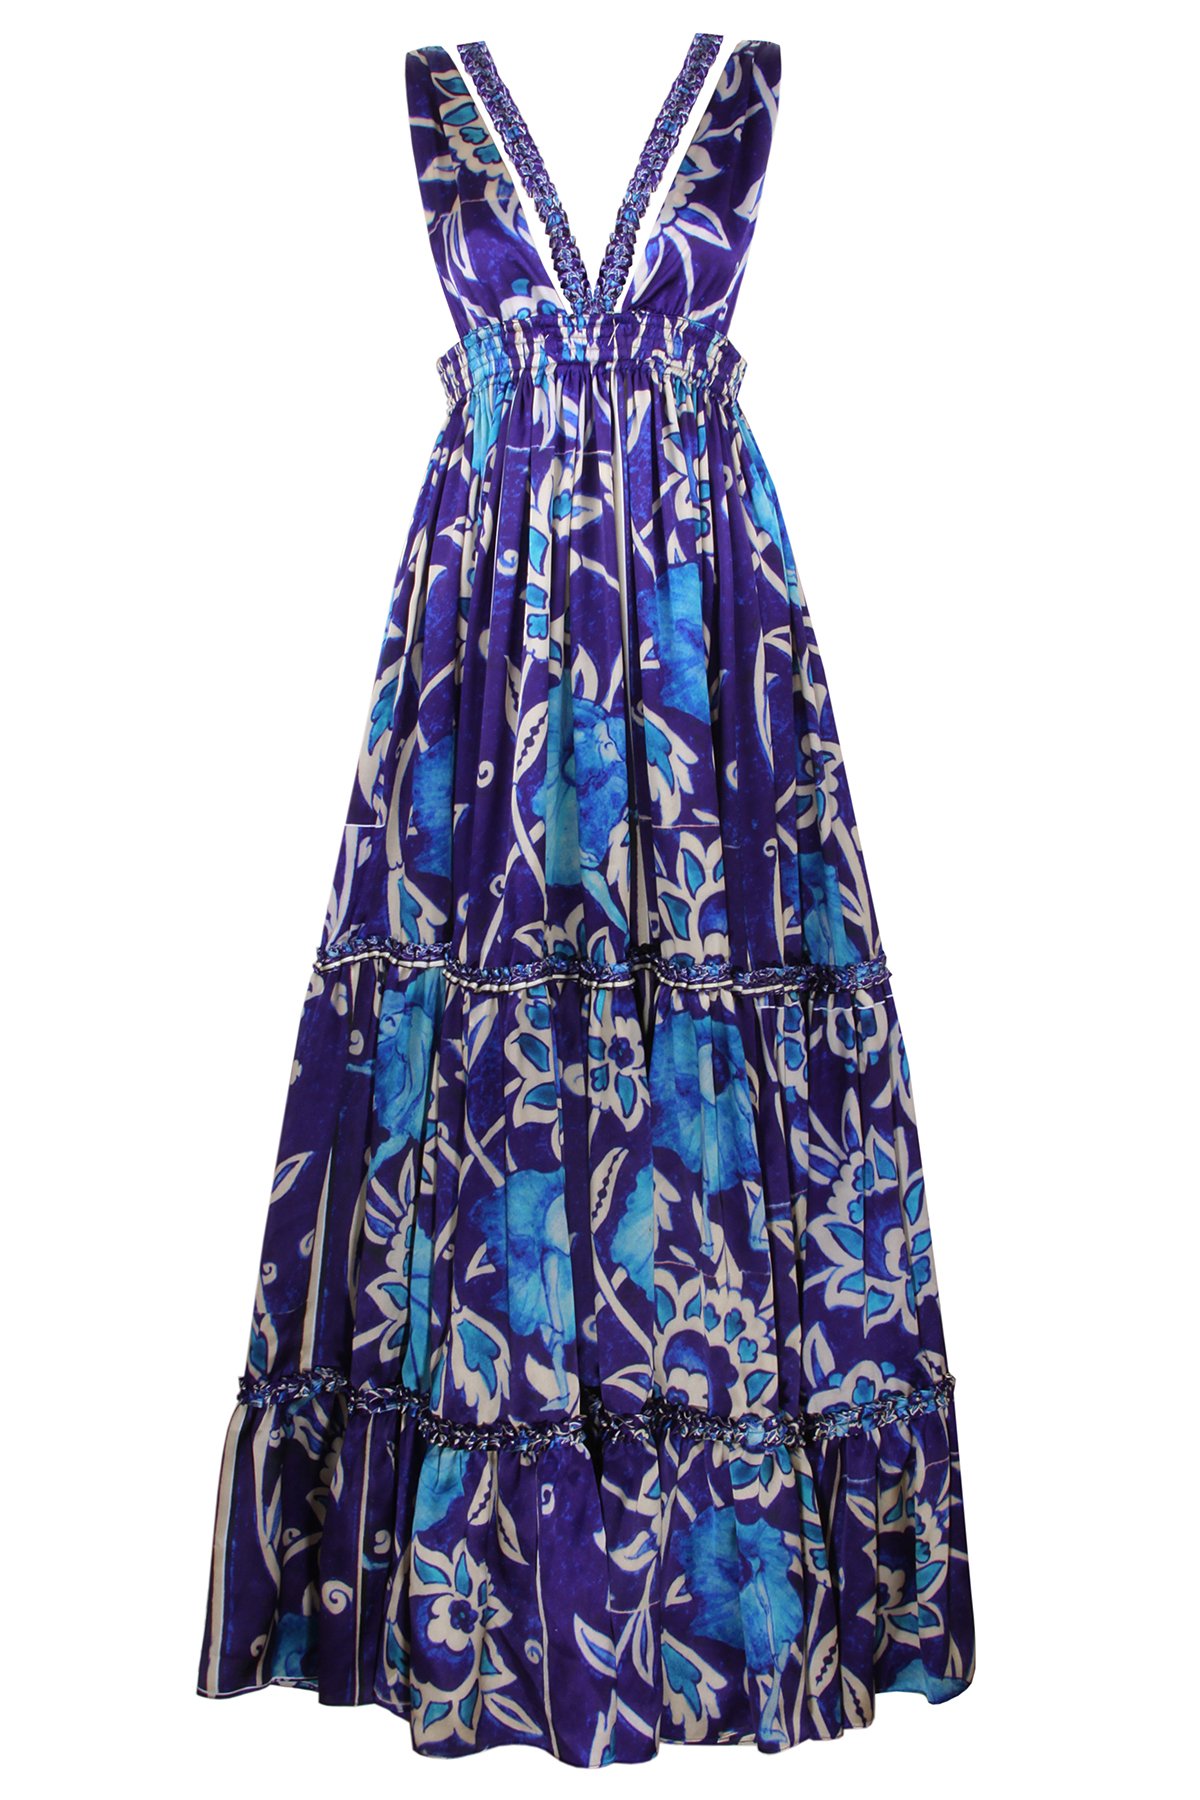 Tile Patterned Silk Dress (Special Order-Custom Made)